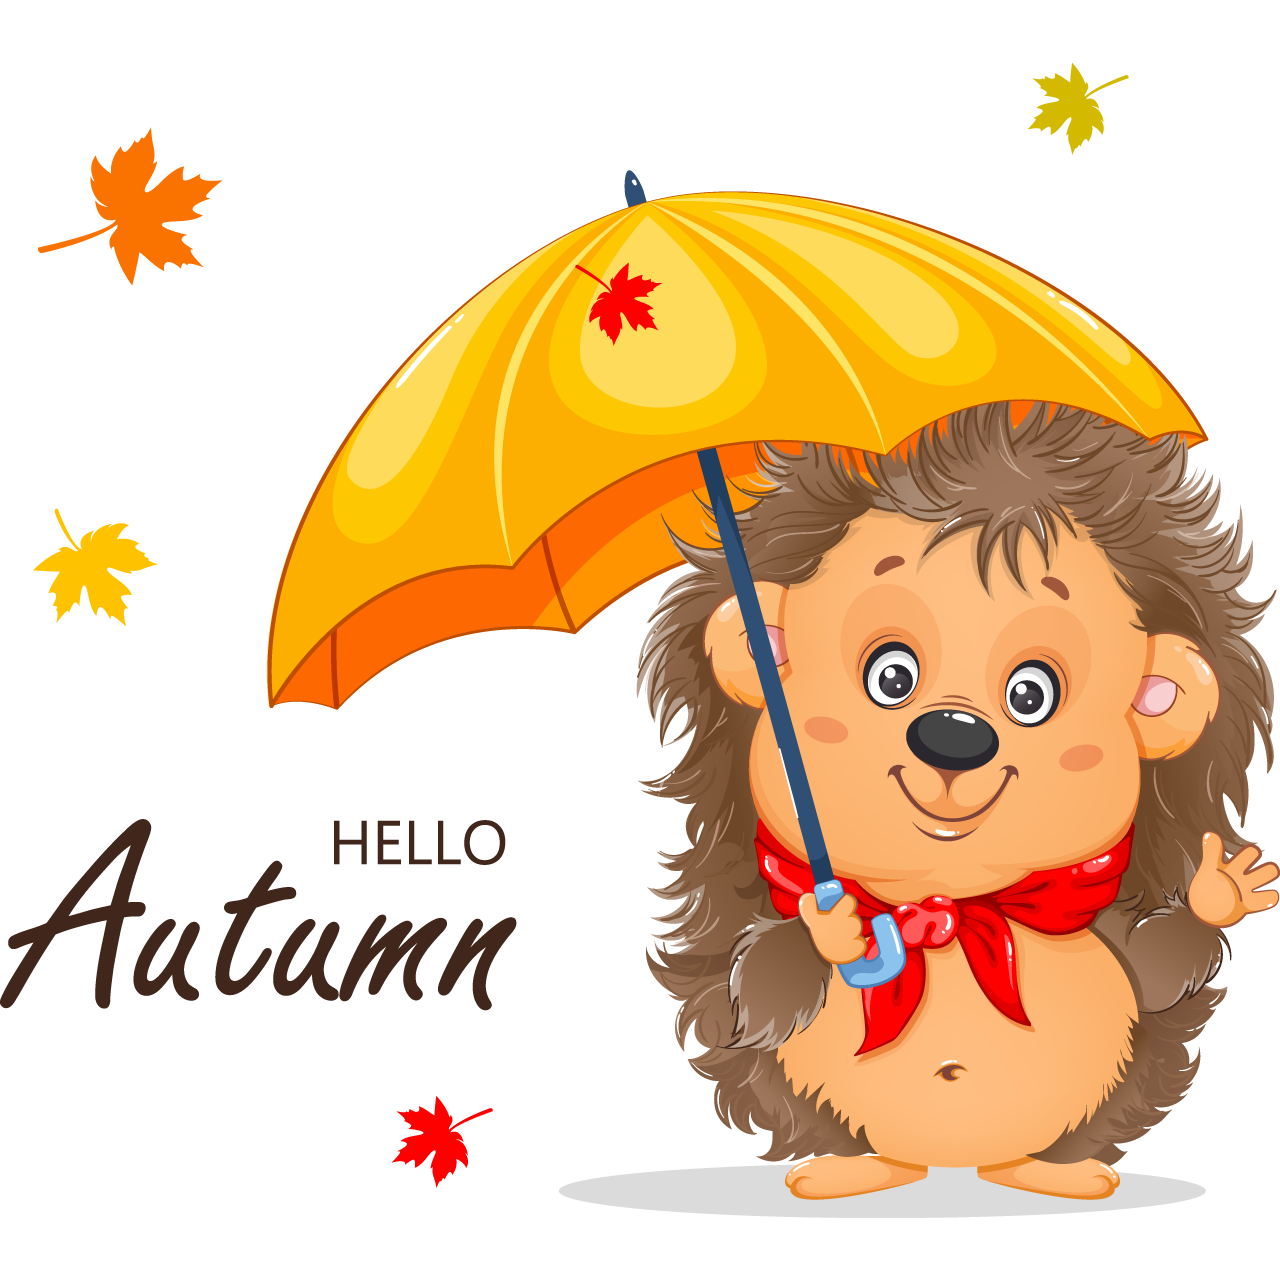 Hi clipart hello autumn cute cartoon hedgehog funny cartoon character hedgehog with umbrellan